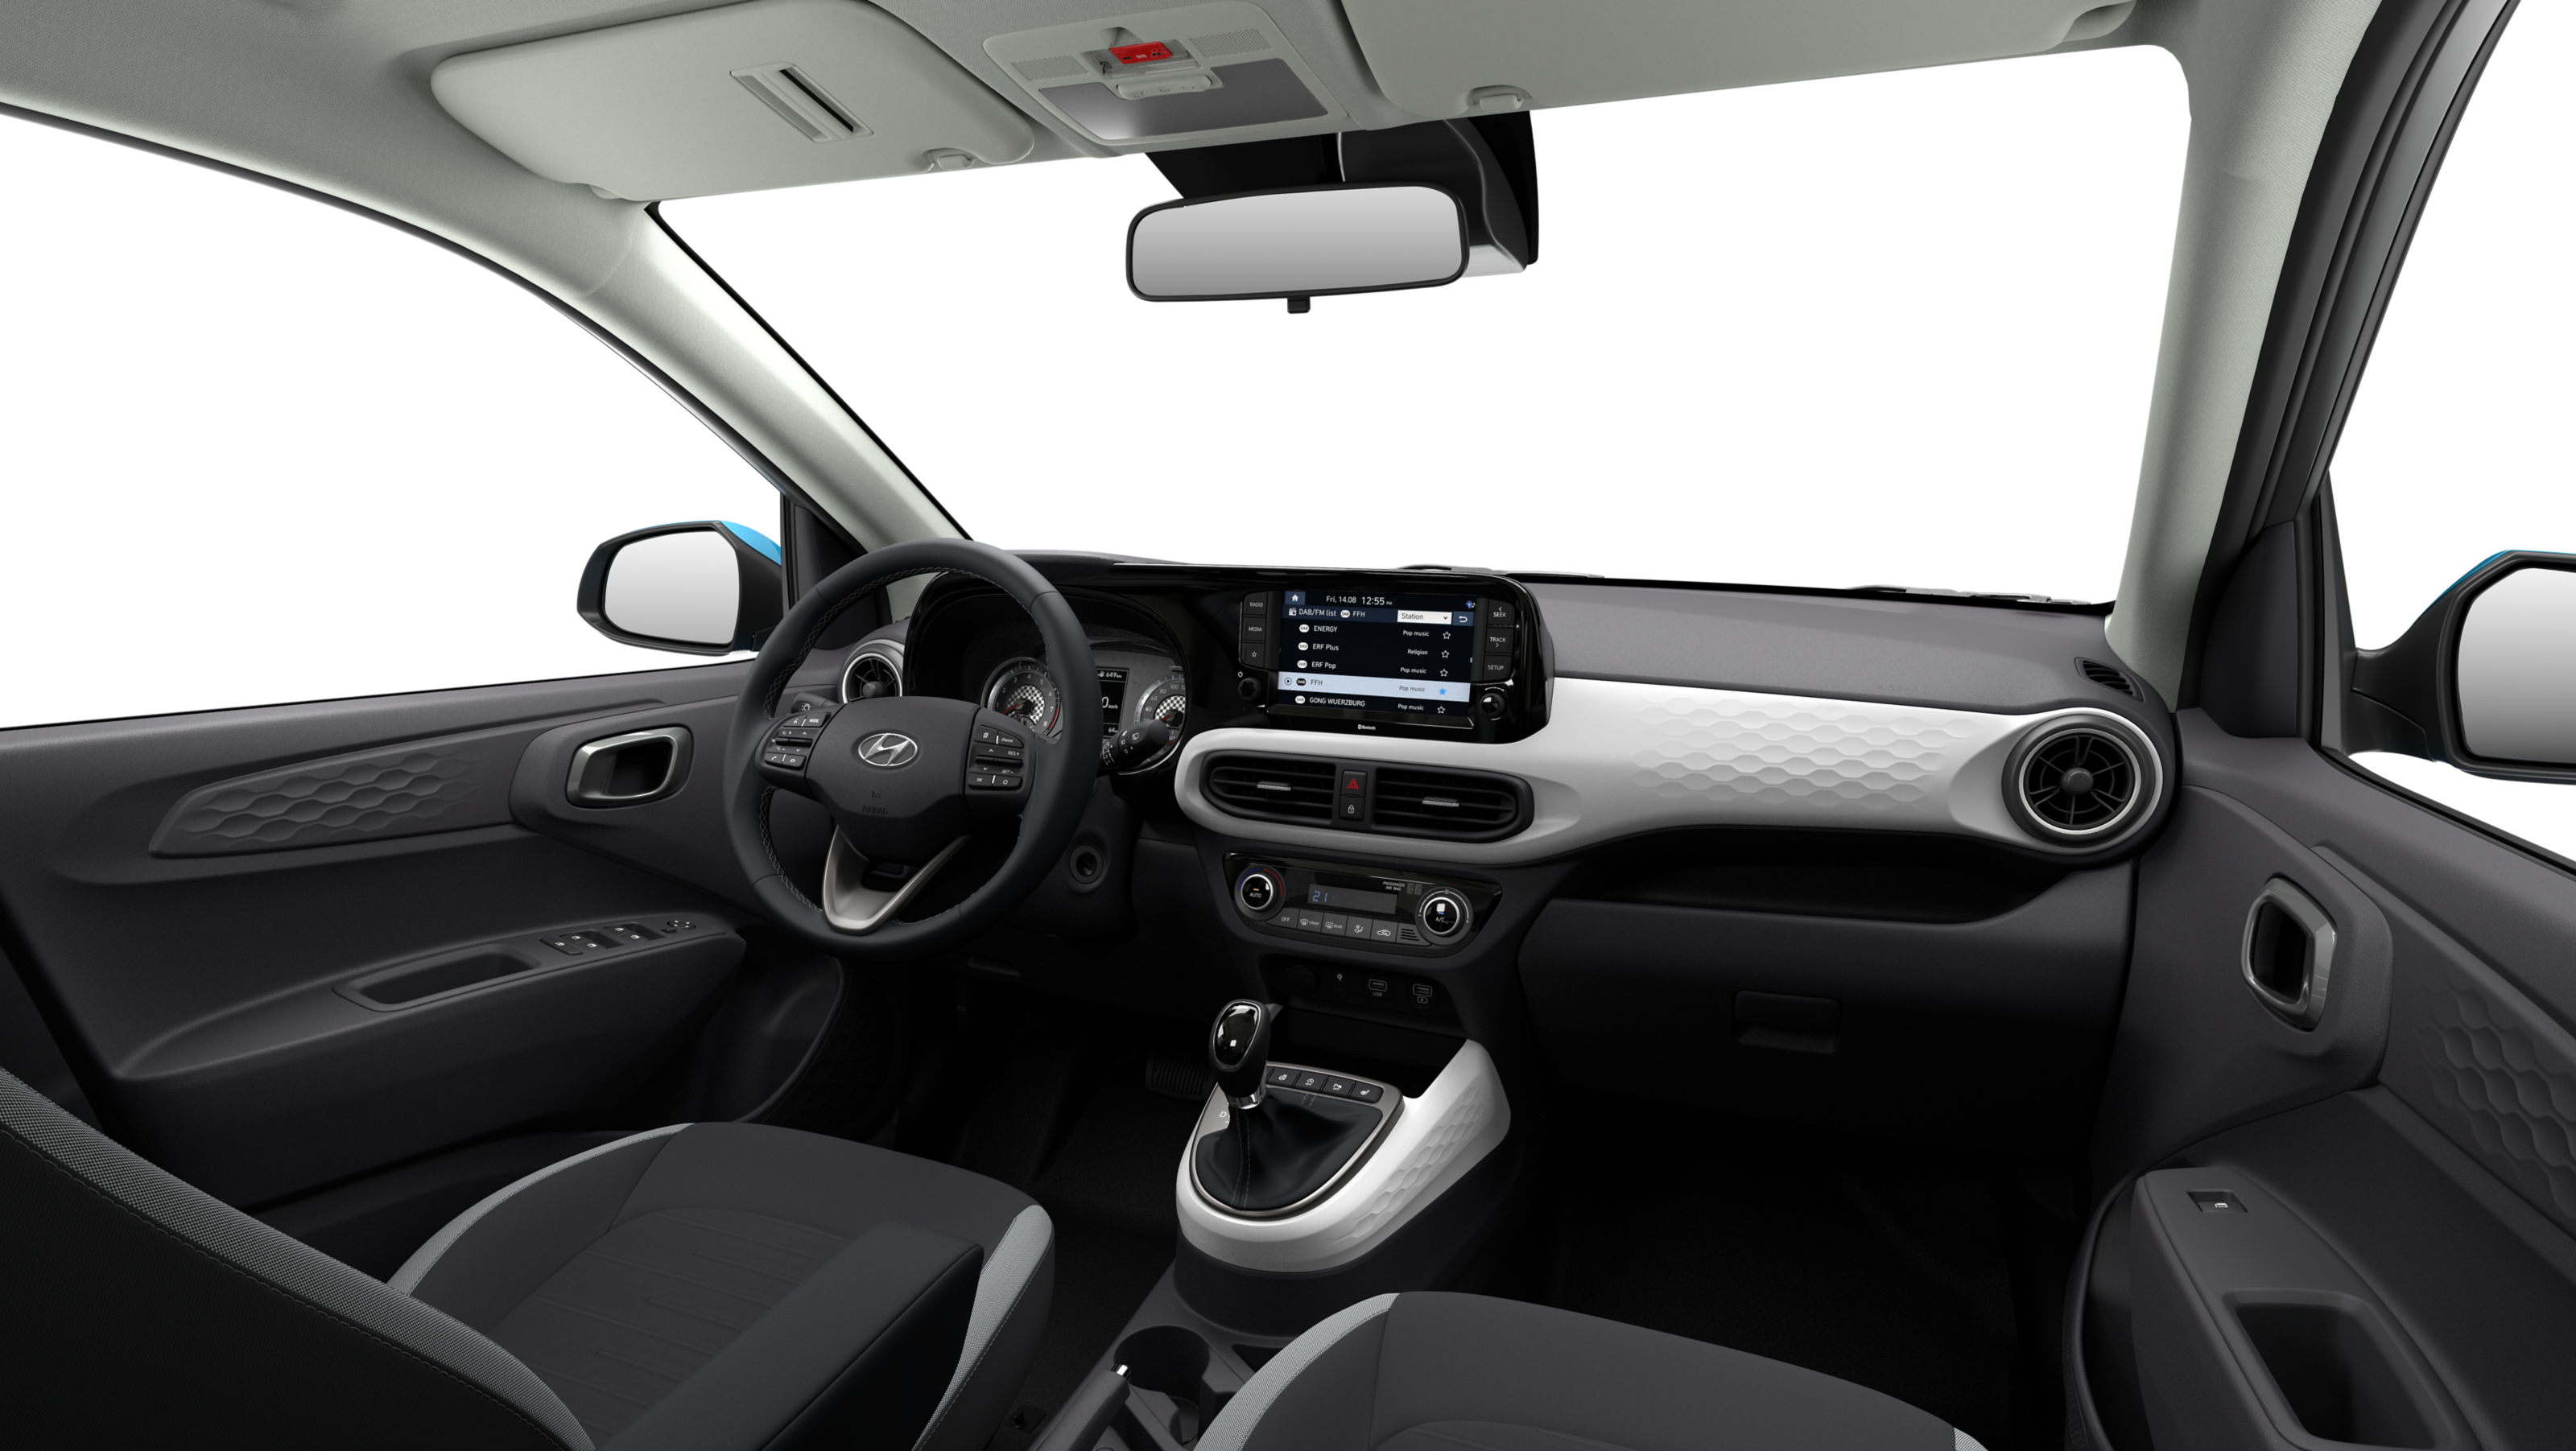 The roomy interior cockpit design of the Hyundai i10.